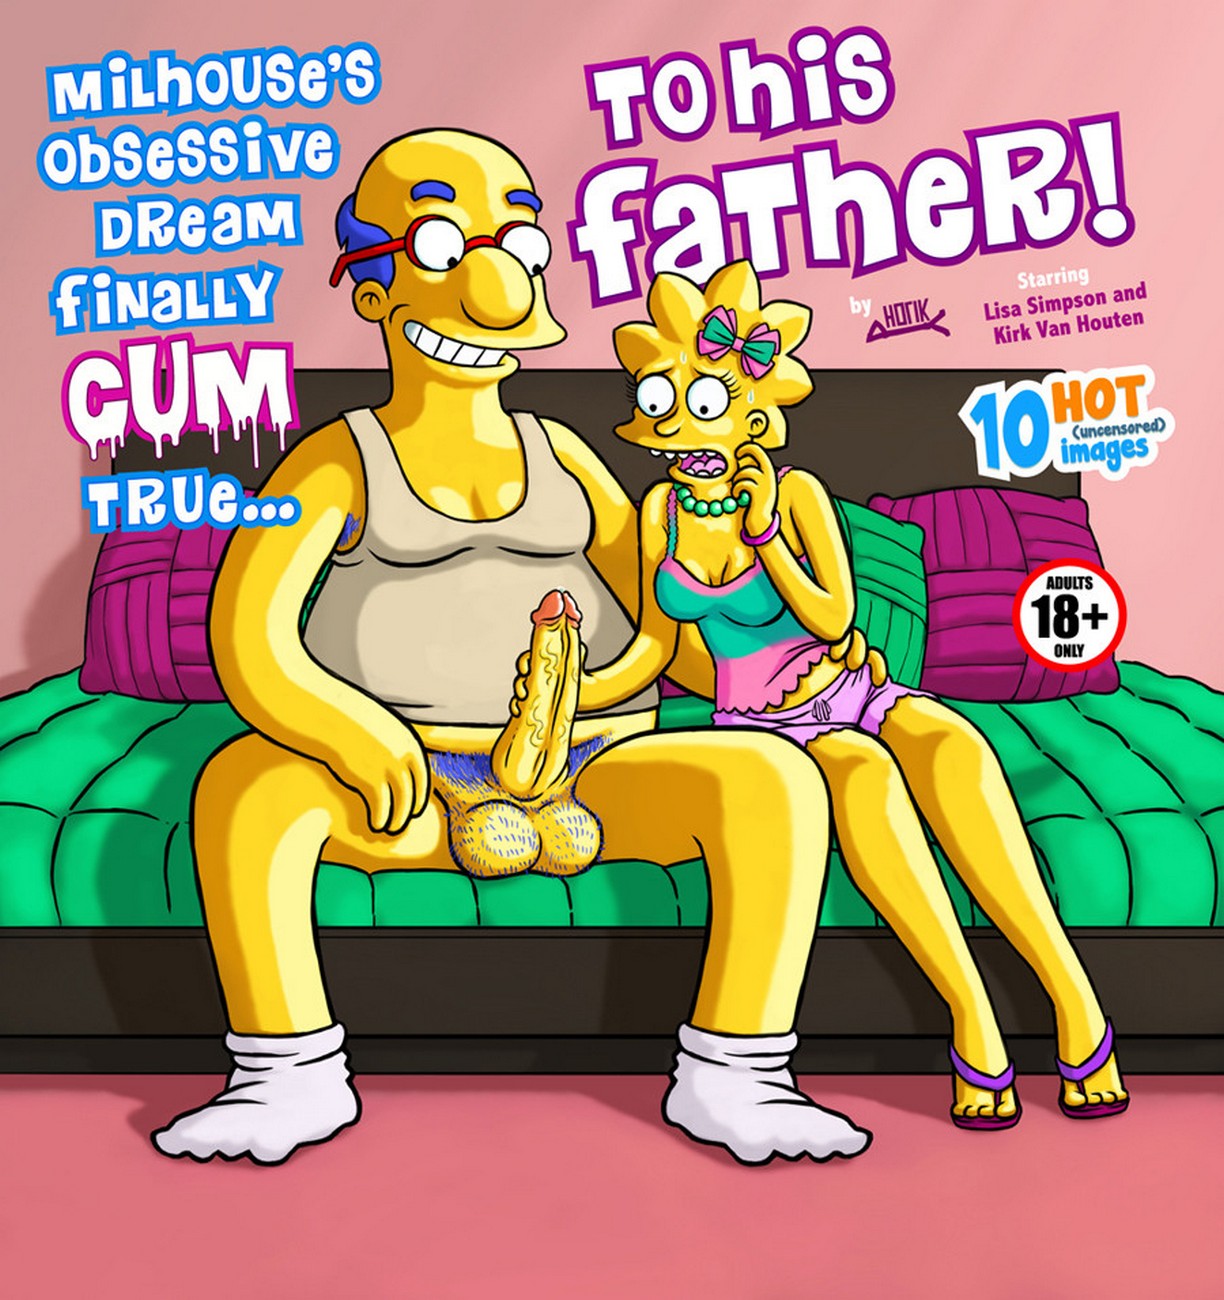 Milhouse's Obsessive Dream Finally Cum True His Father00